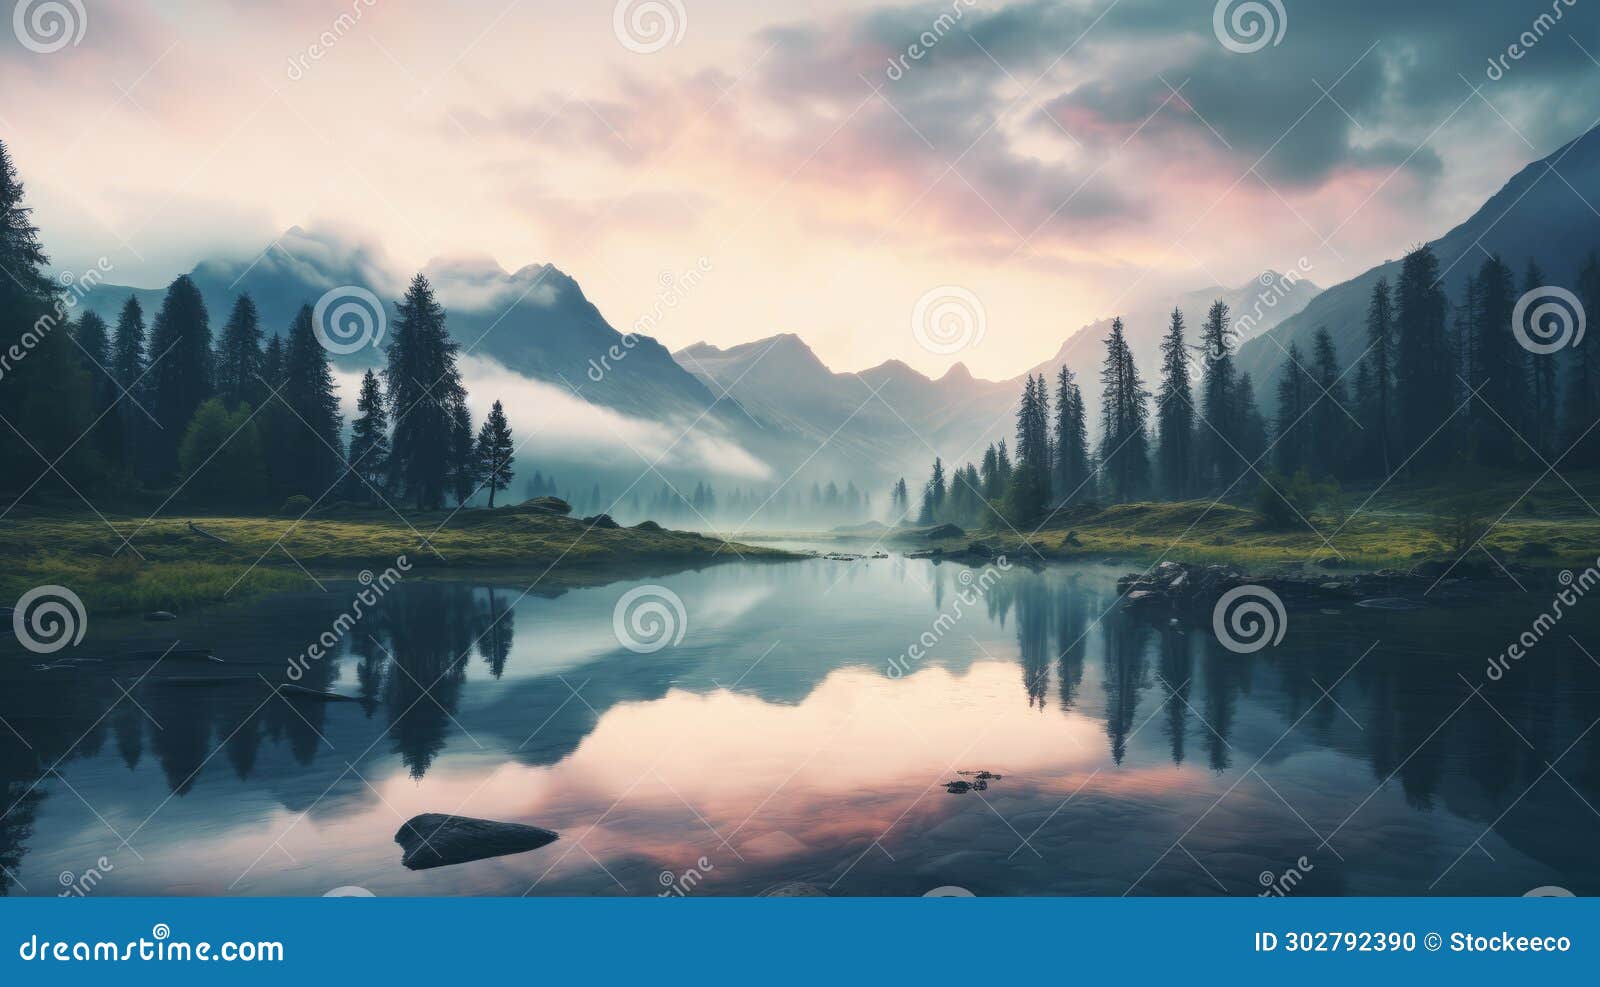 serene sunrise mountain landscape on lake - 8k resolution